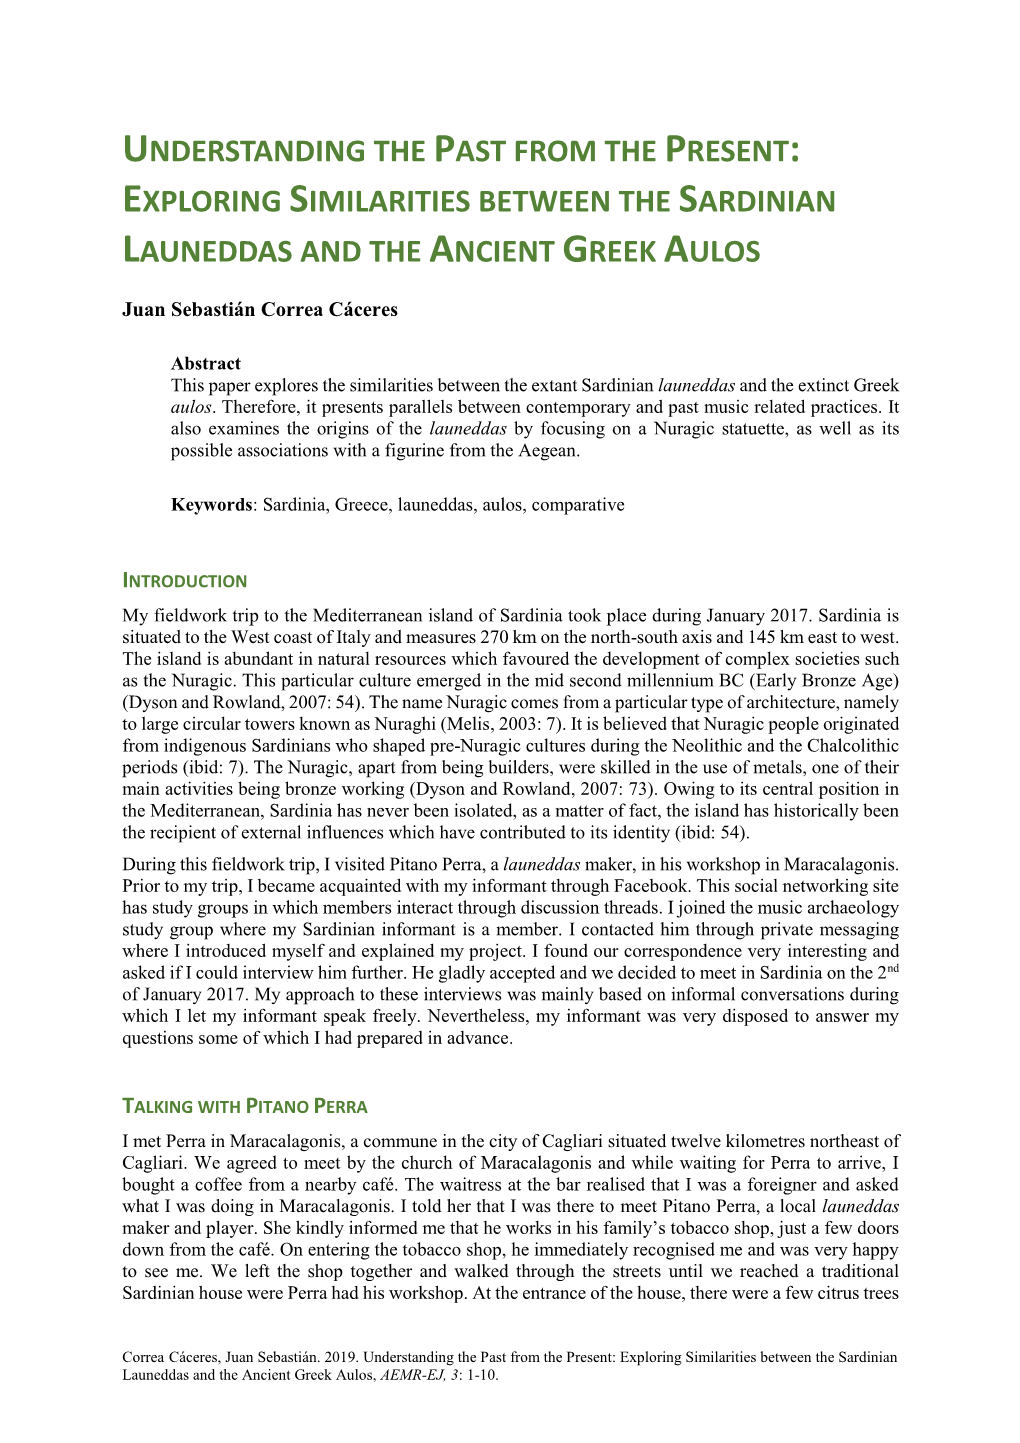 Exploring Similarities Between the Sardinian Launeddas and the Ancient Greek Aulos